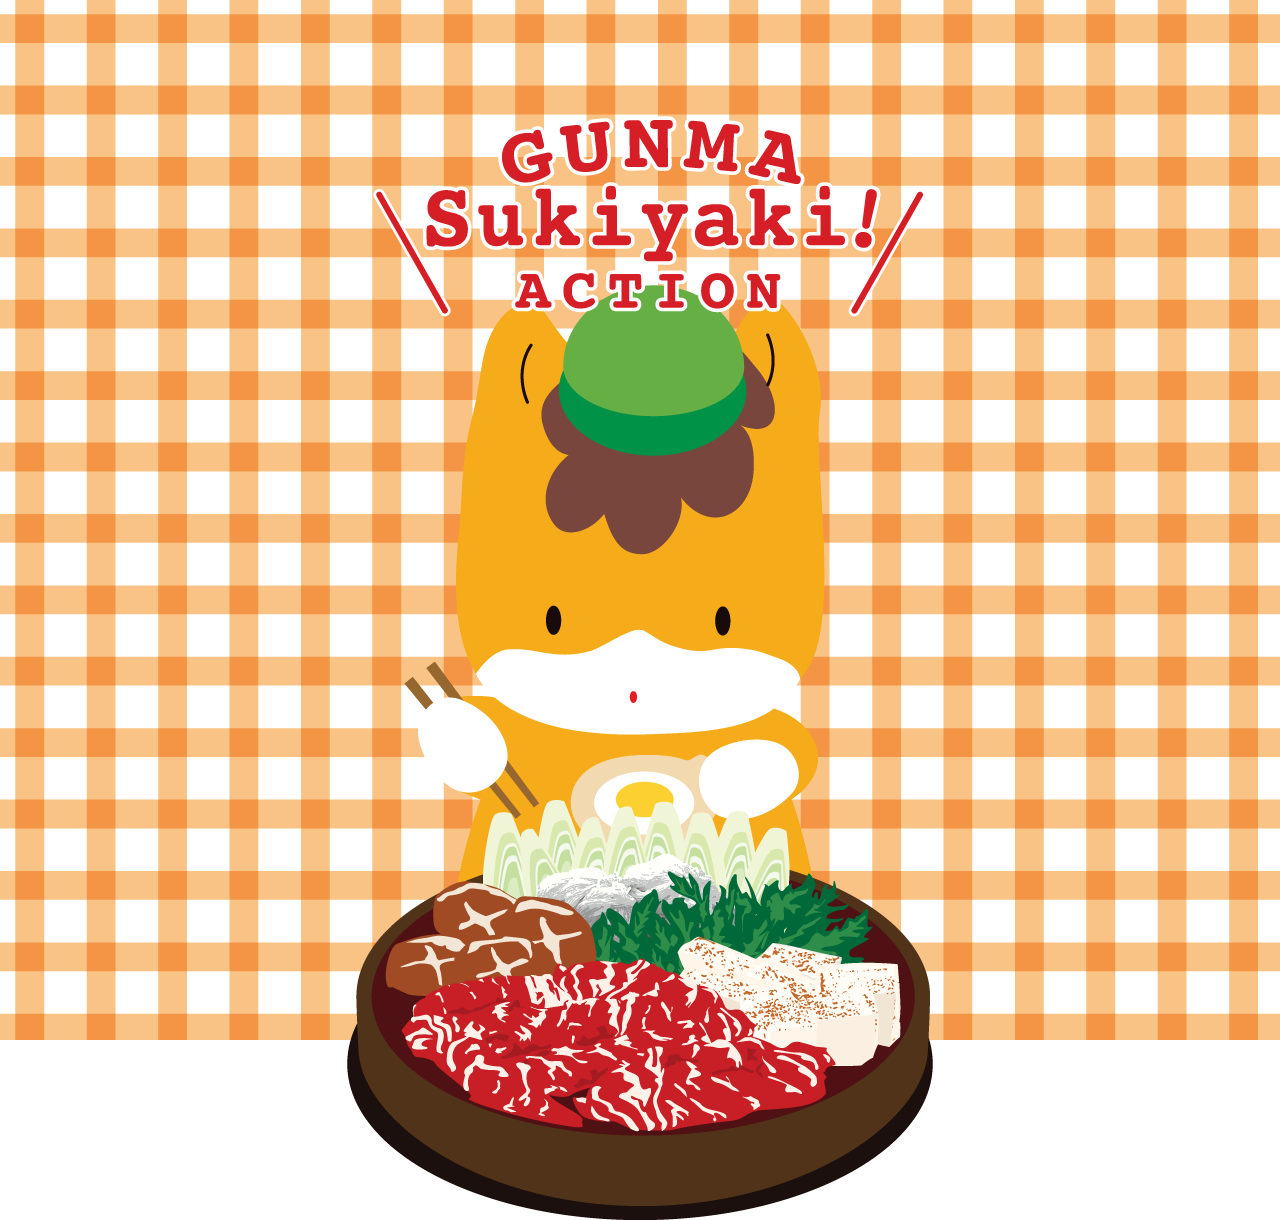 GUNMA Sukiyaki! ACTION